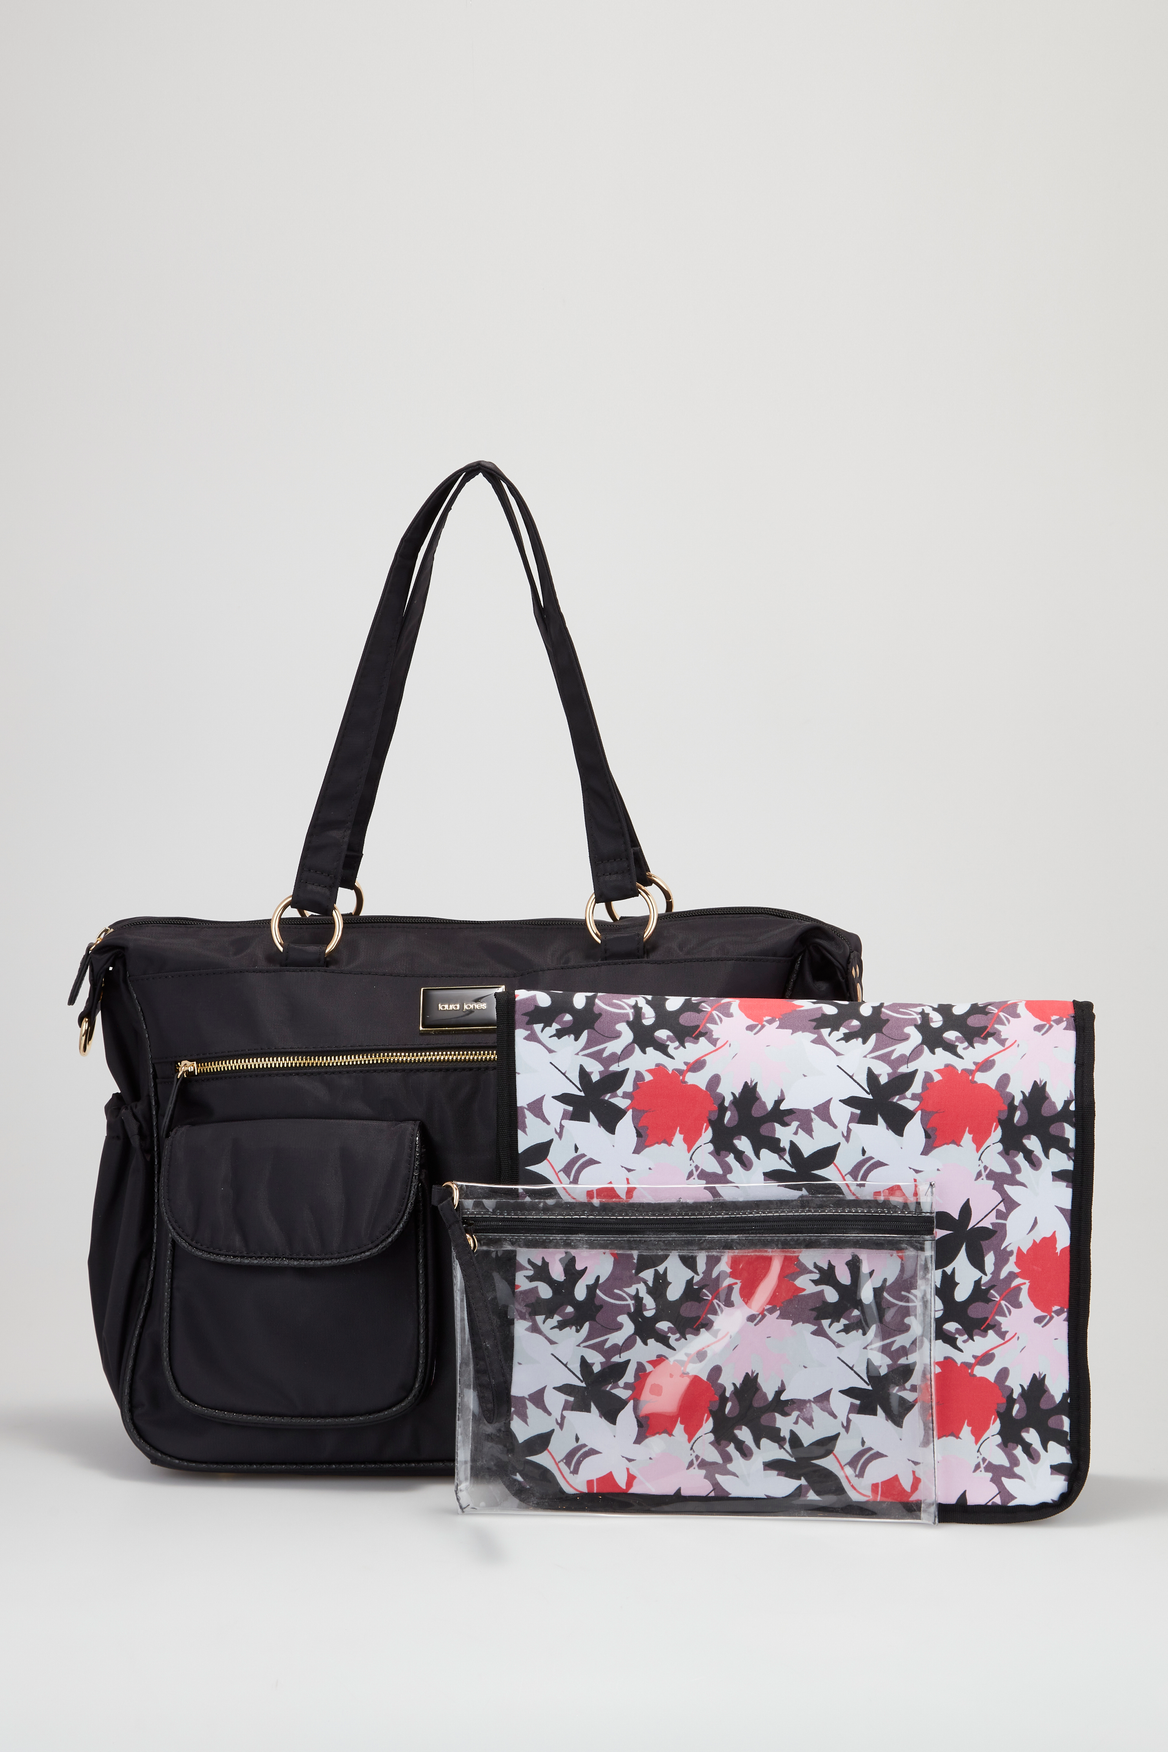 Laura Jones Womens Black & White Floral Handbag BNWT RRP $59.95(s)